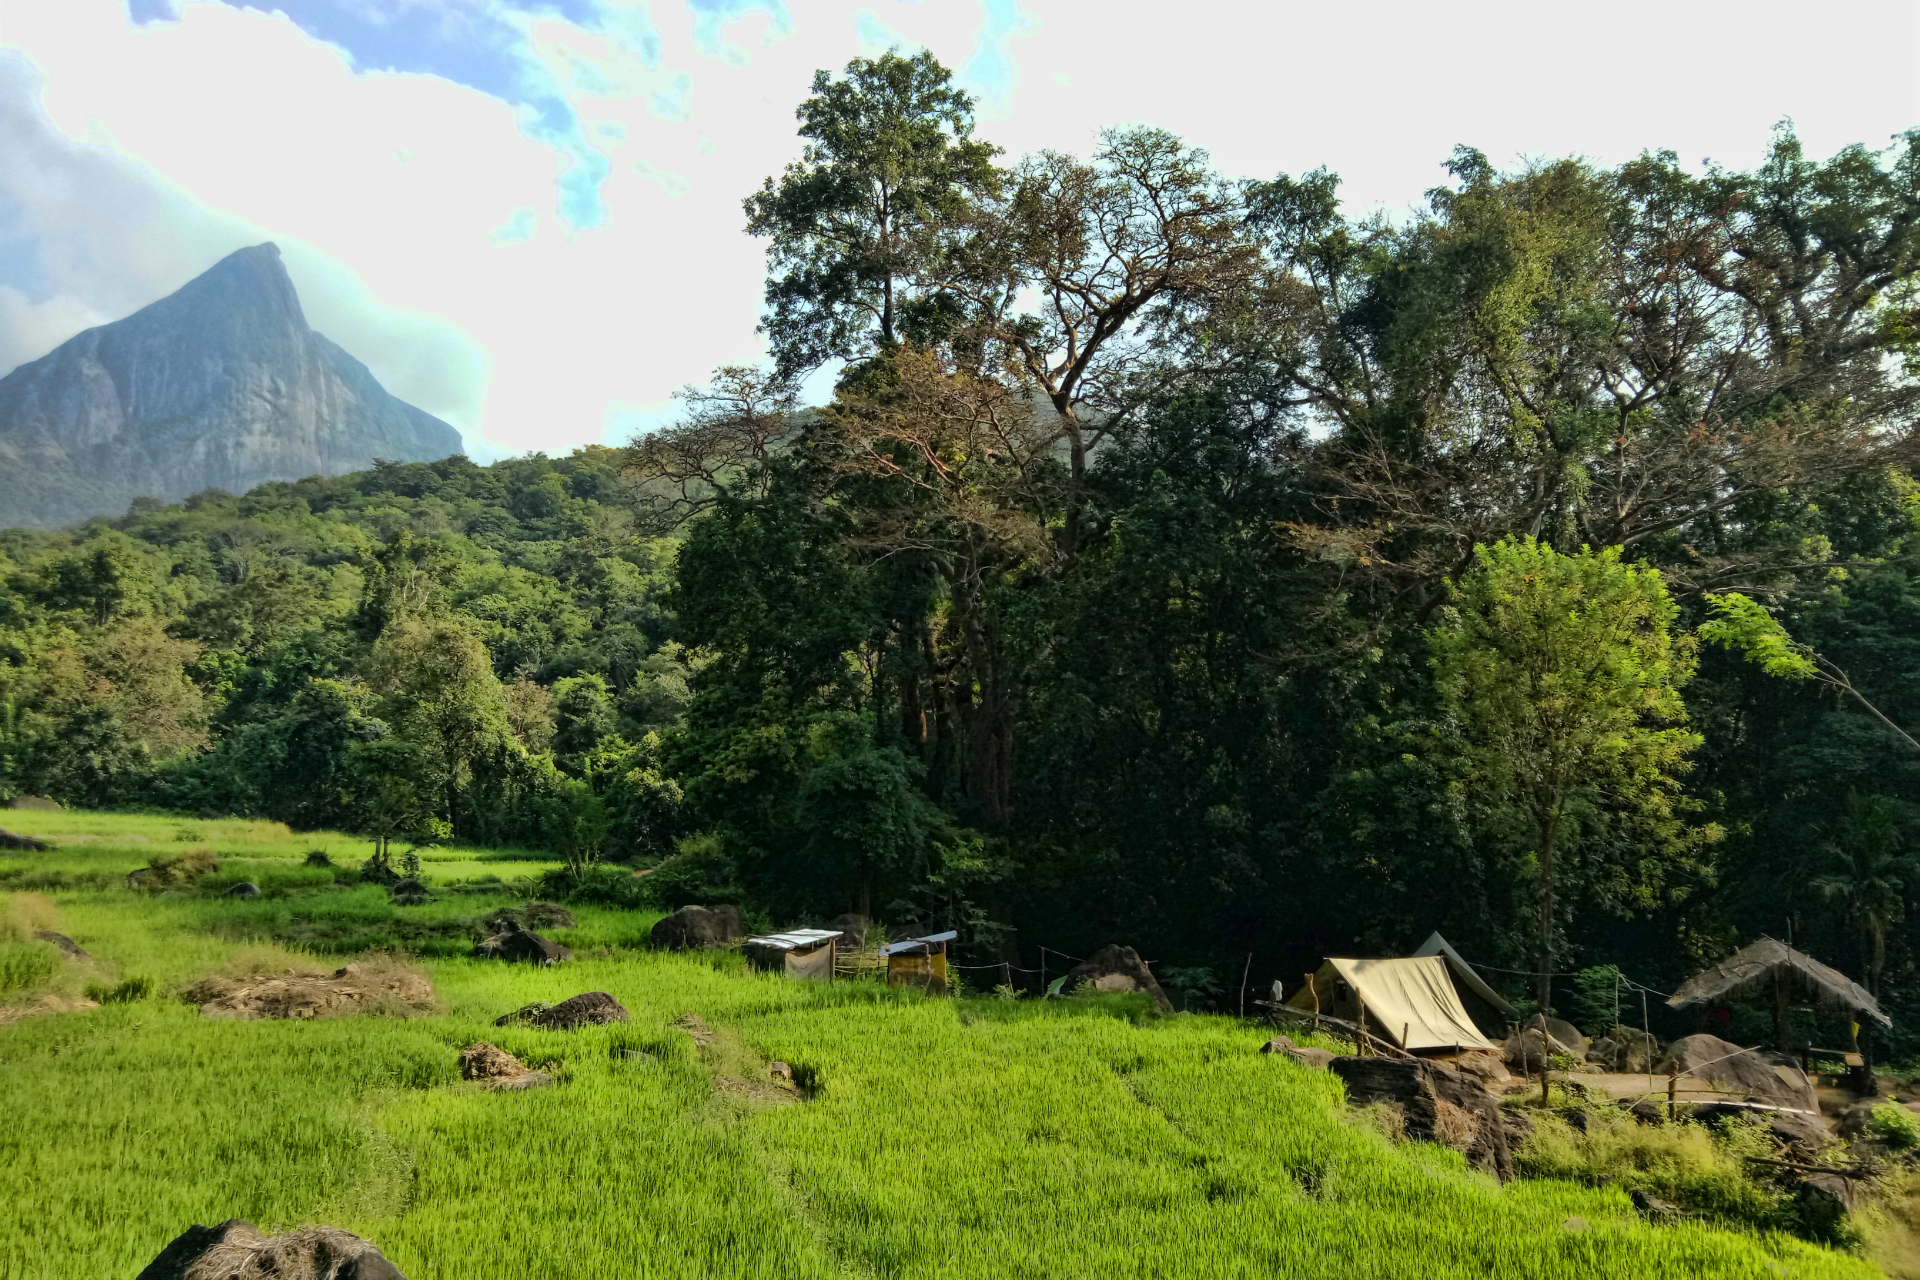 The landscape of Meemure village in Sri Lanka